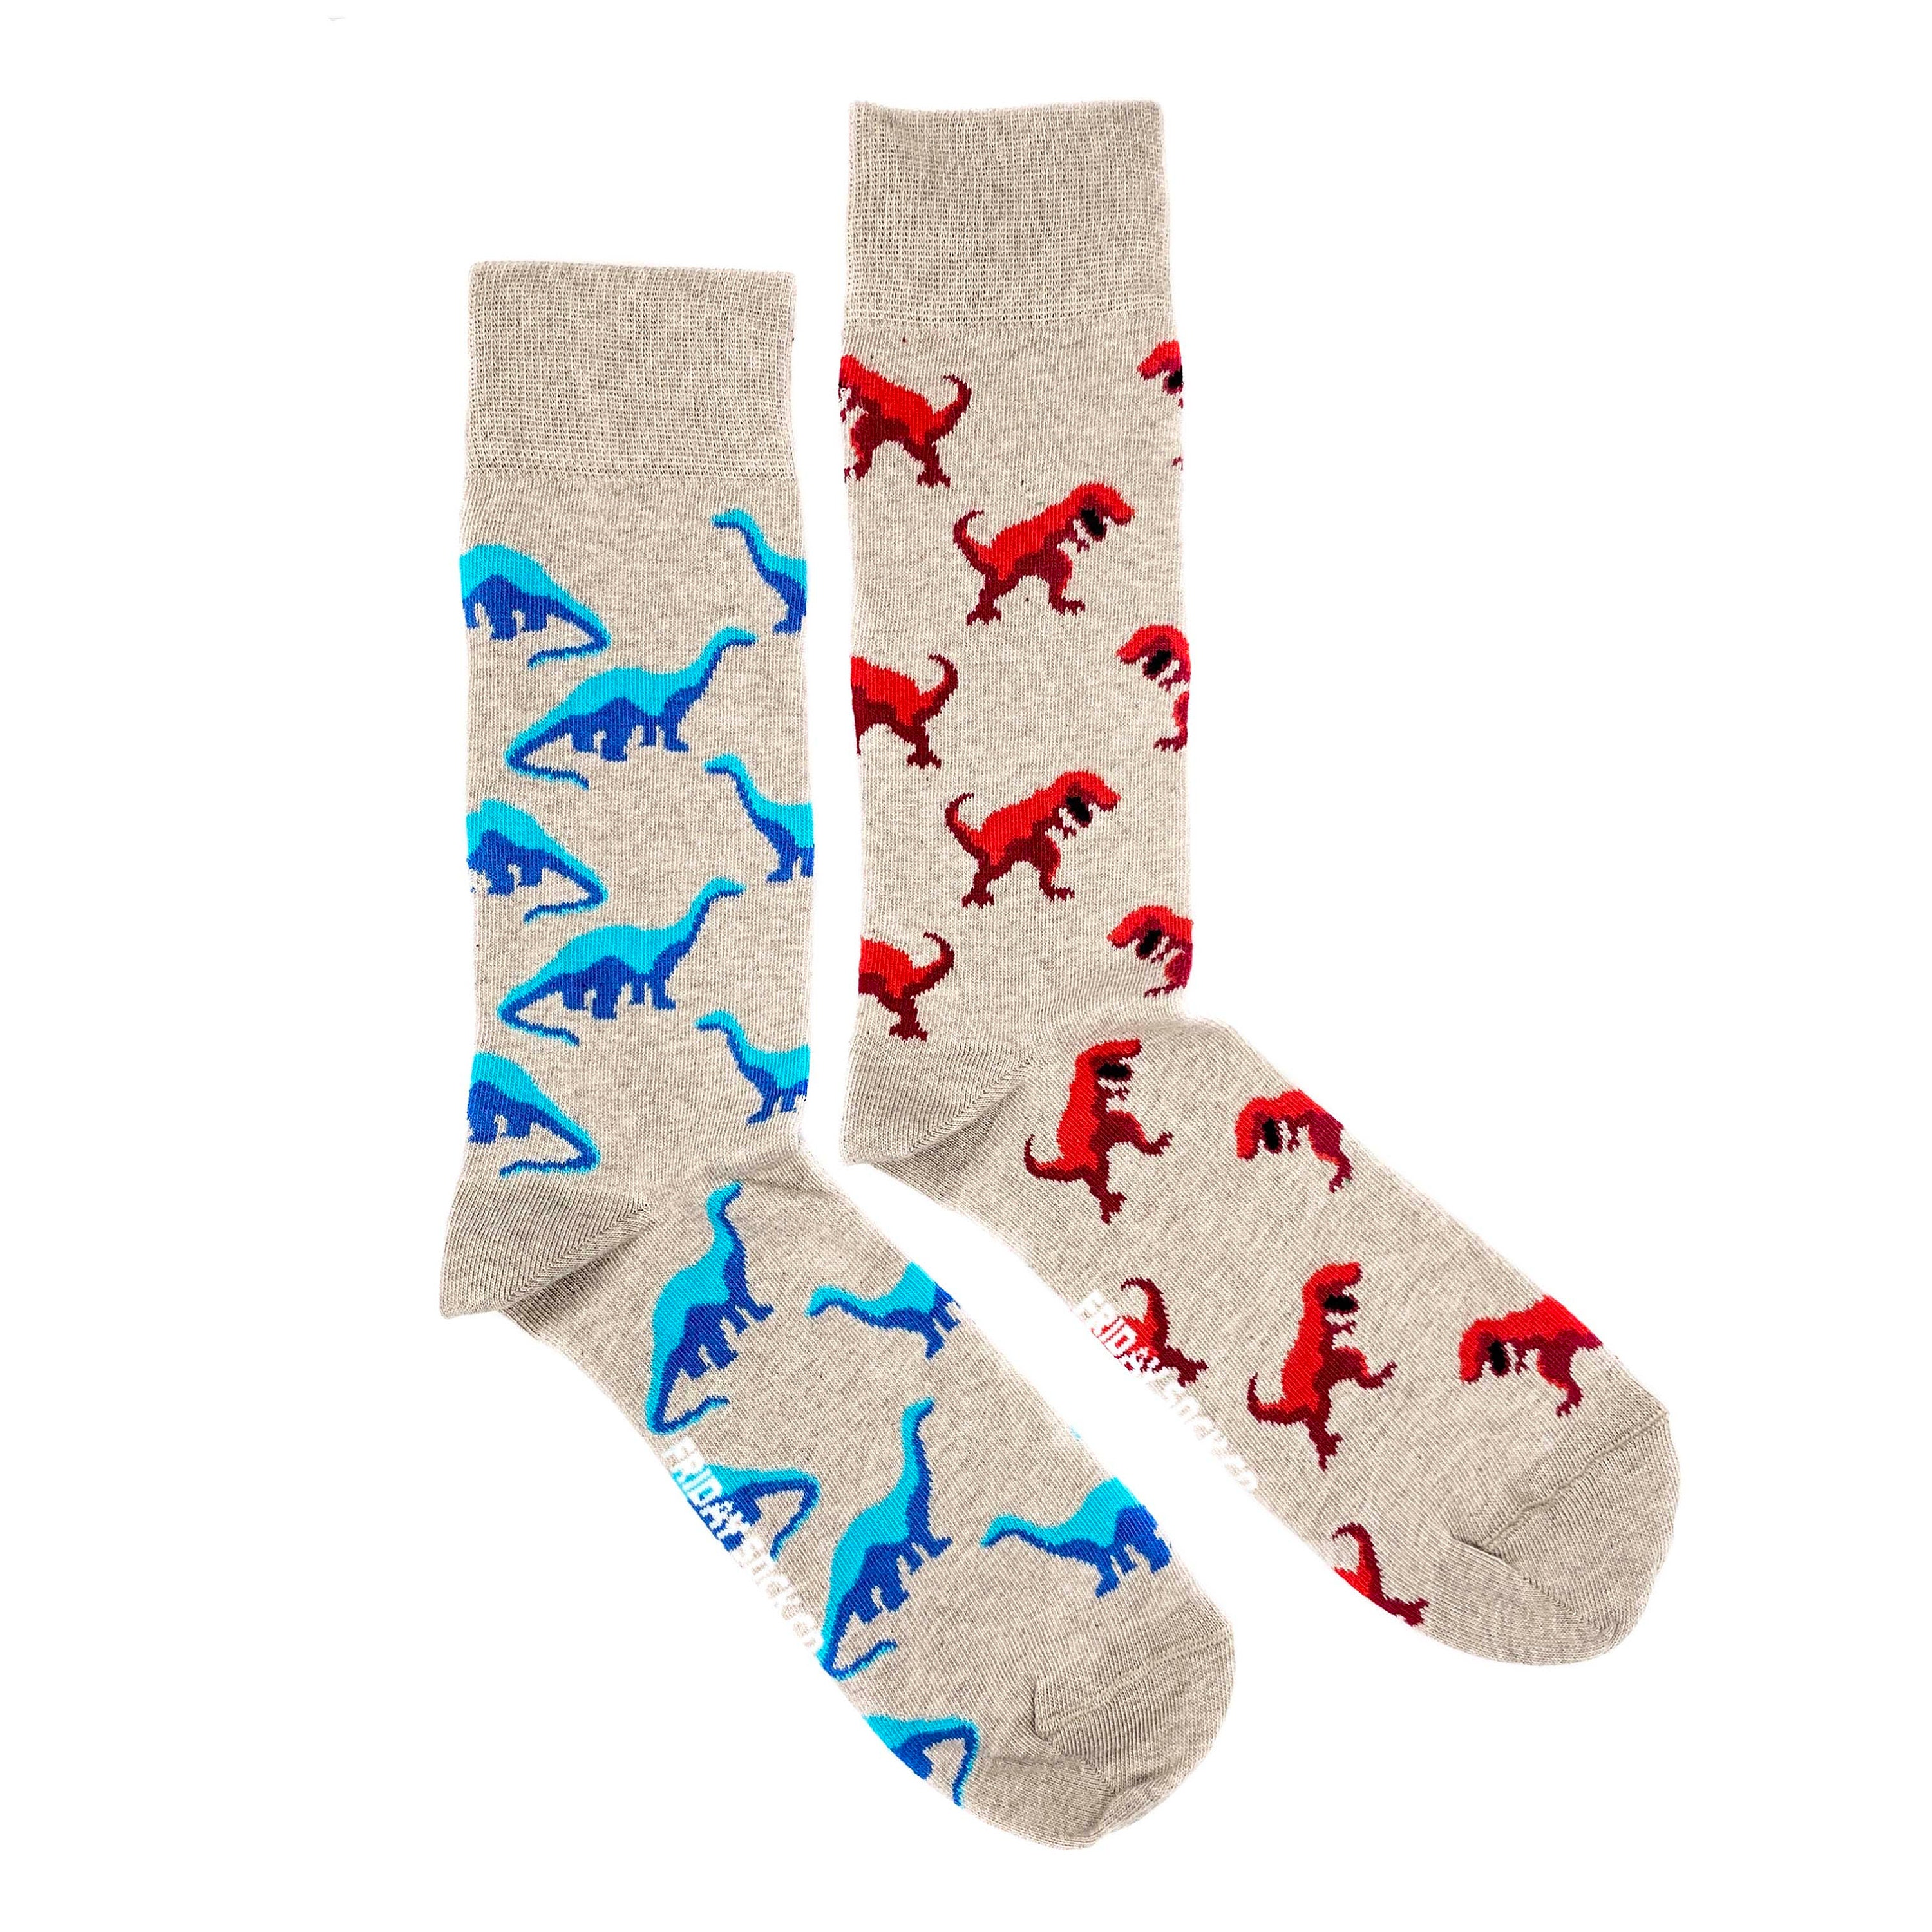 Mens Socks Mismatched Socks Dinosaurs Crazy Socks | Etsy